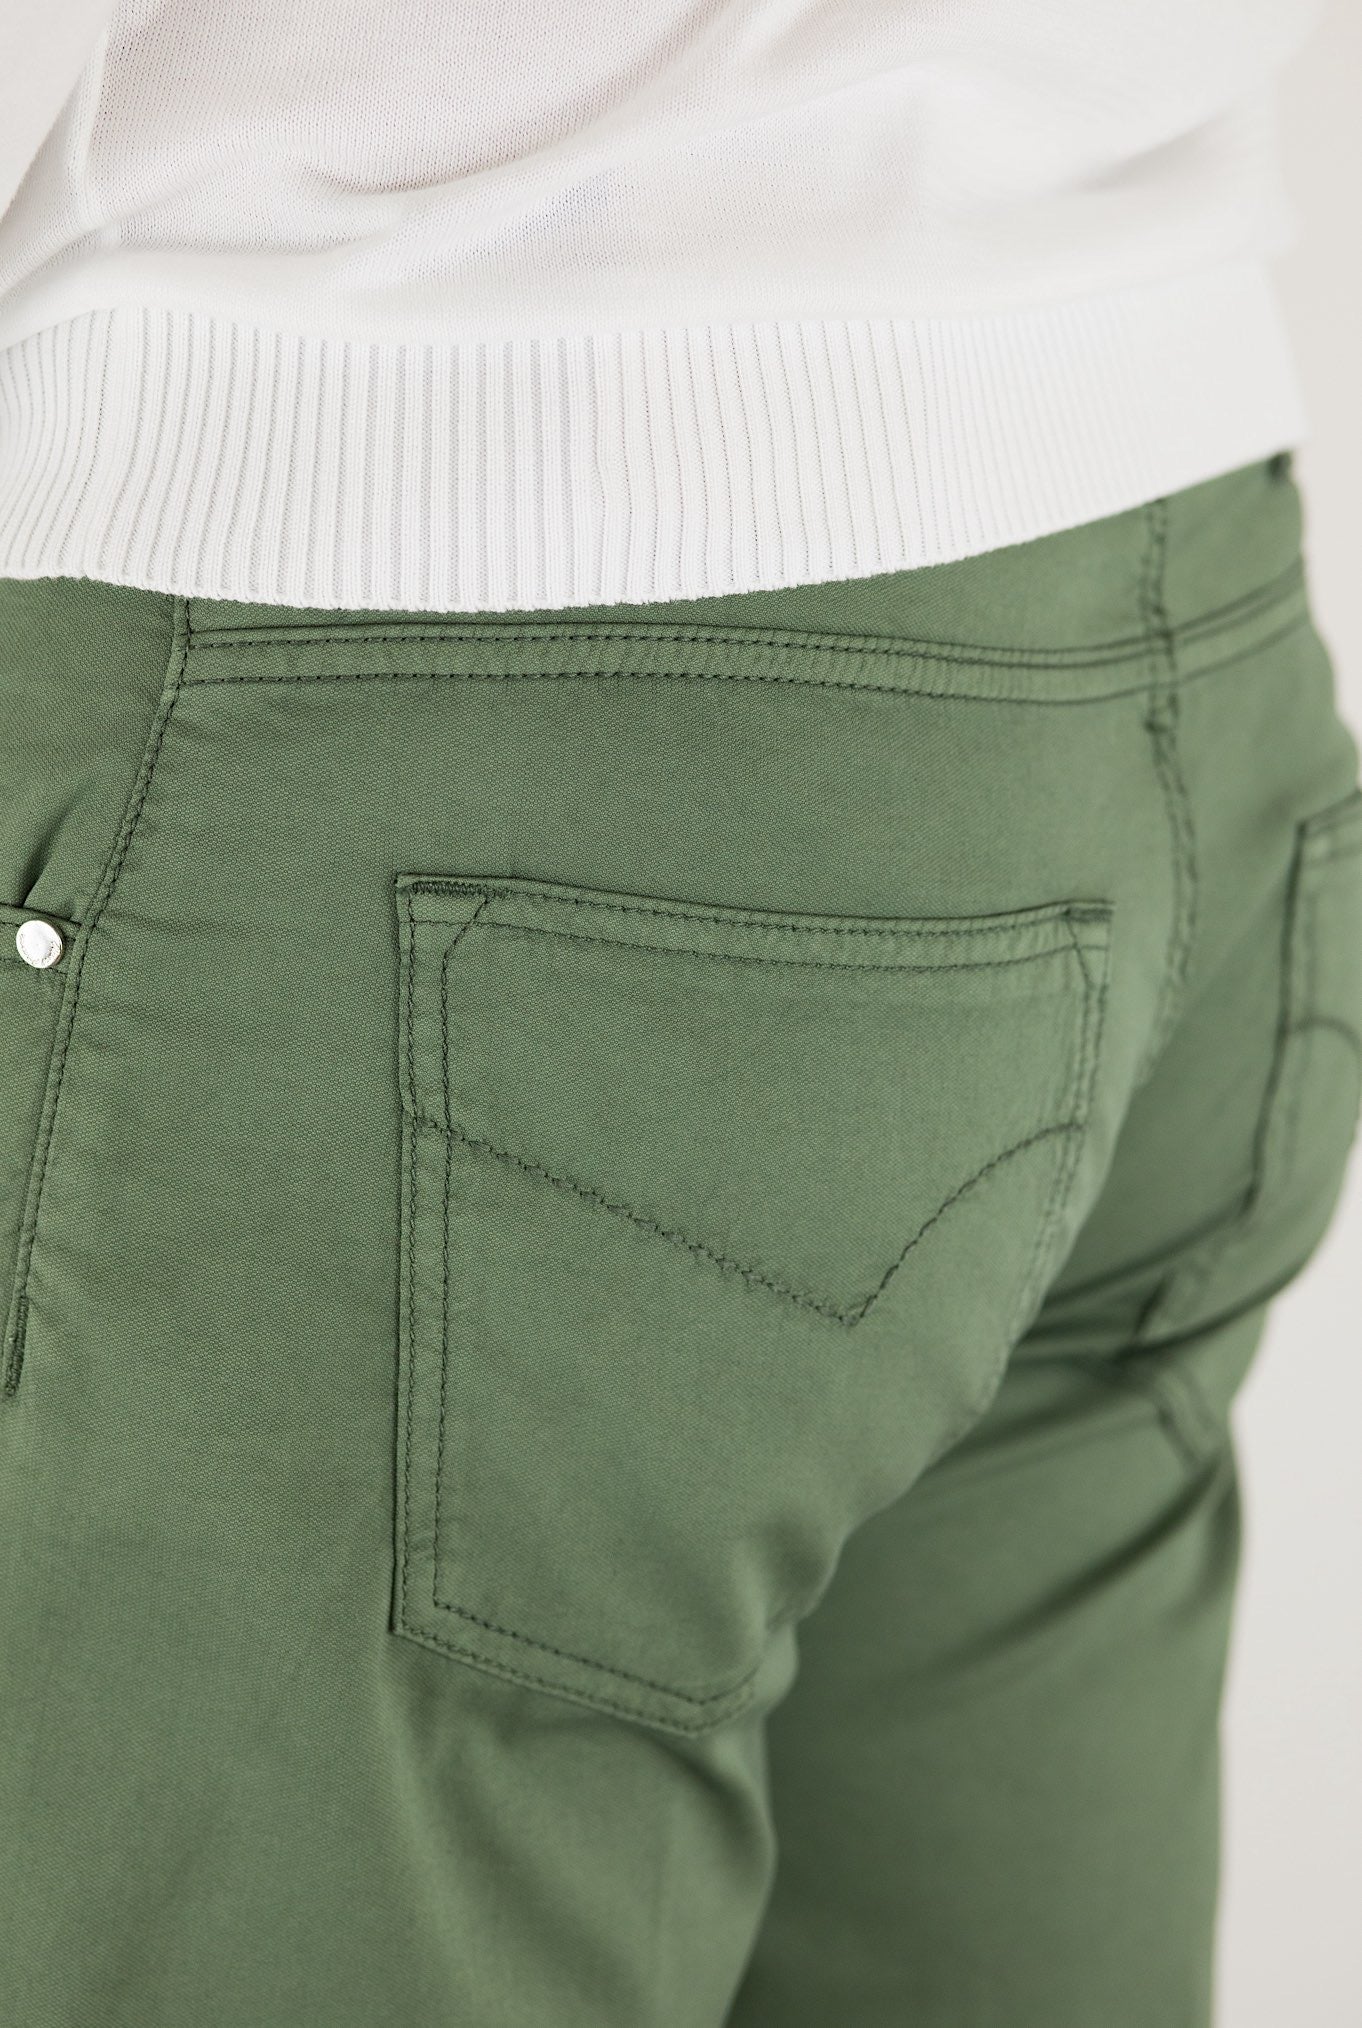 PESCAROLO Pantaloni 5 Tasche mod. Nerano Cotone Seta Verdi